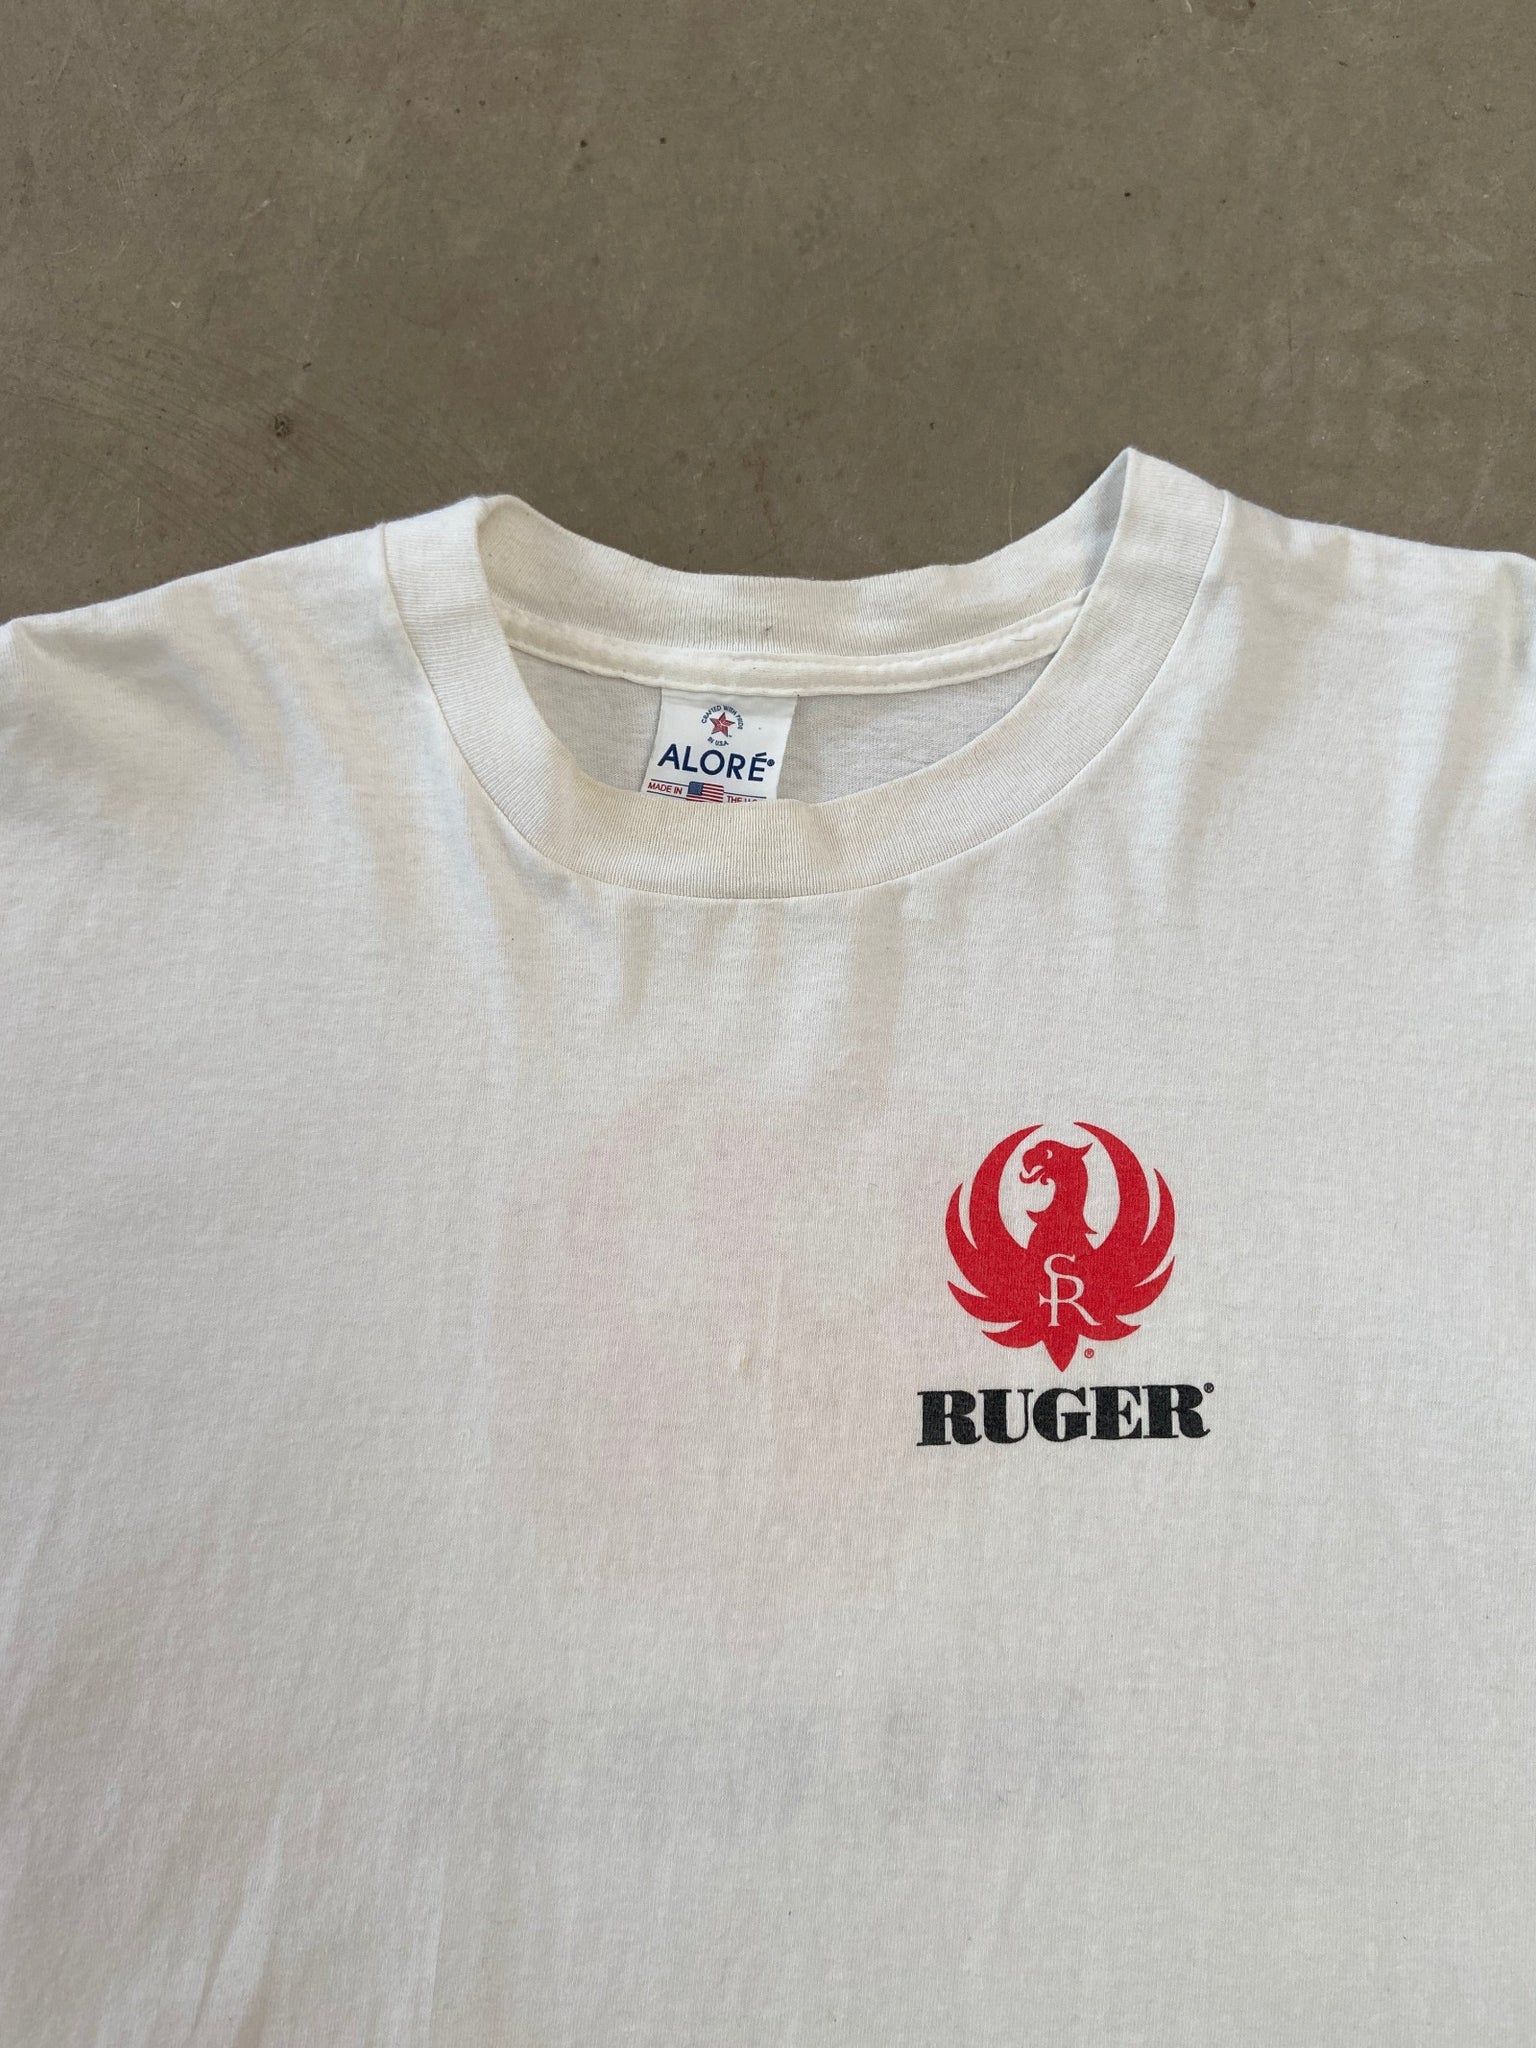 1990's Ruger Firearms T-shirt - XL